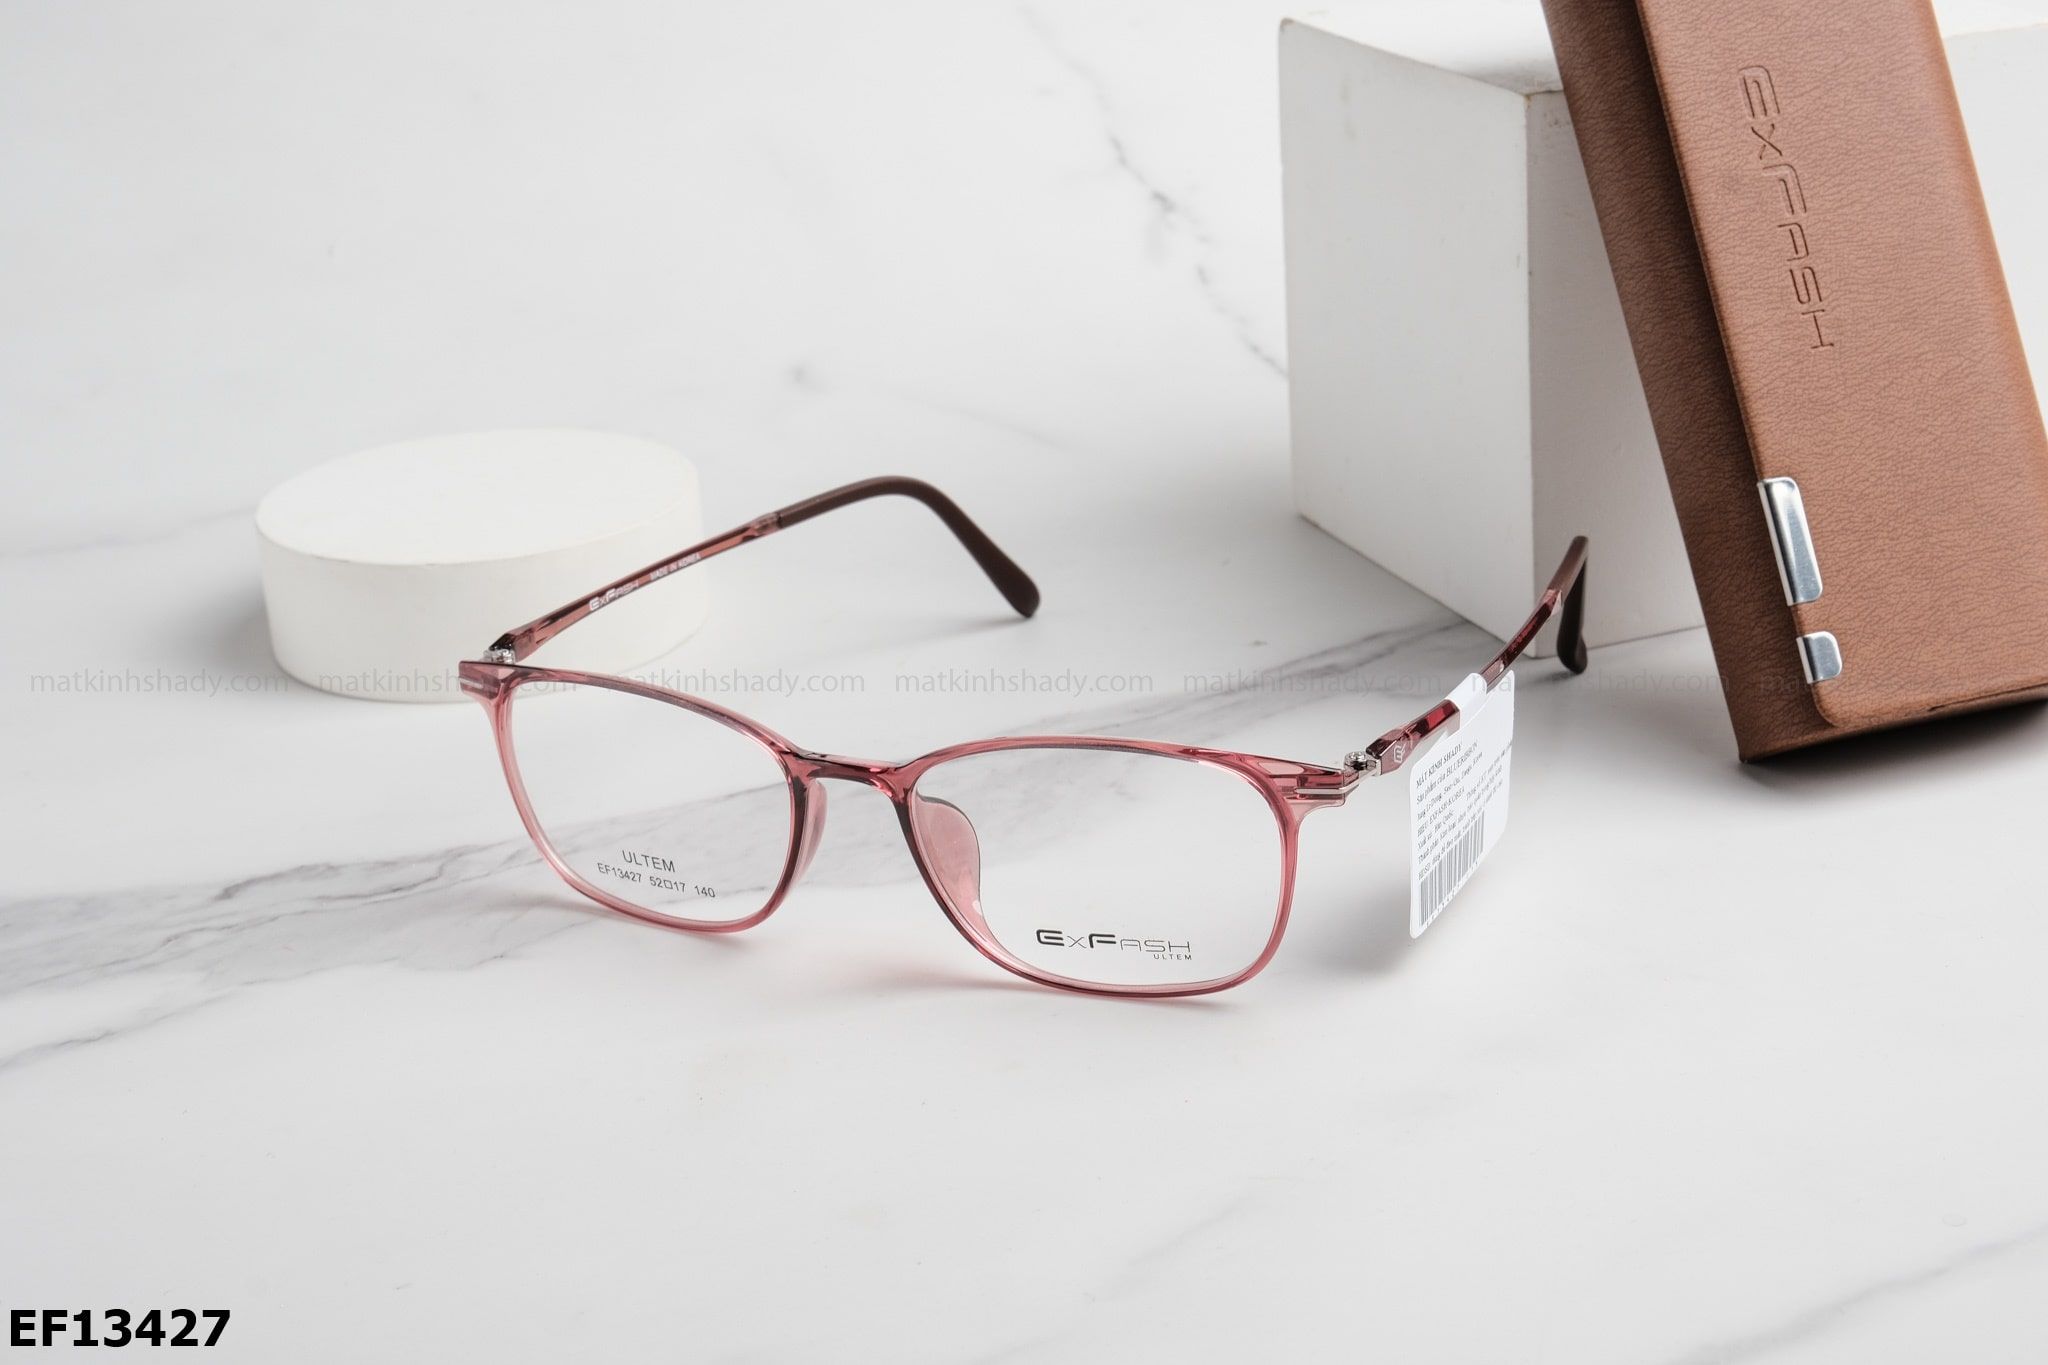  Exfash Eyewear - Glasses - EF13427 